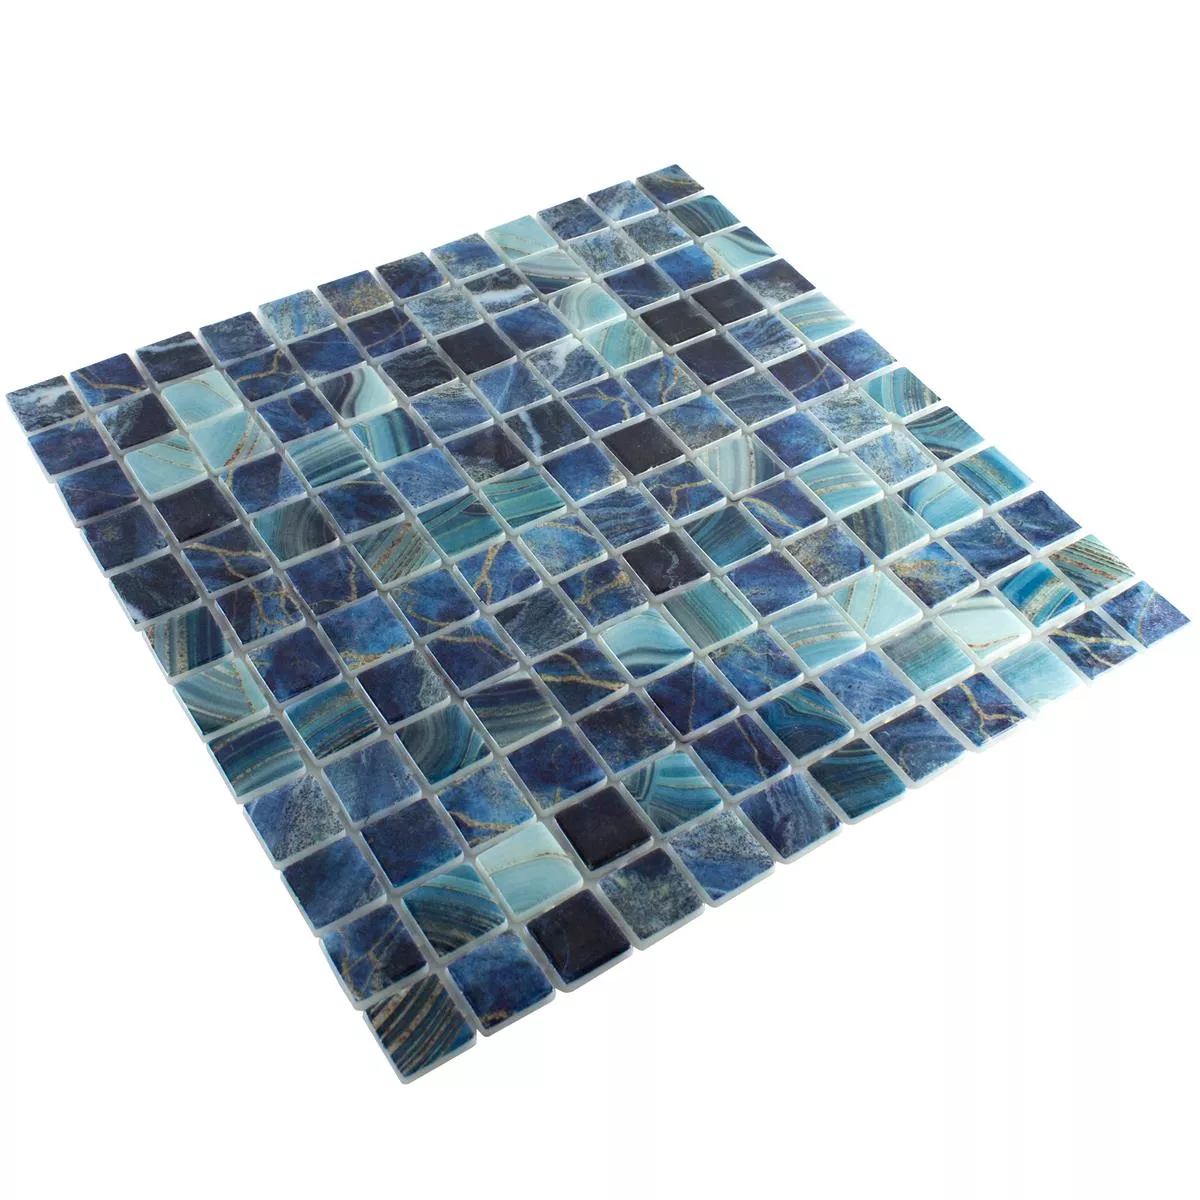 Glas Schwimmbad Mosaik Baltic Blau Türkis 25x25mm